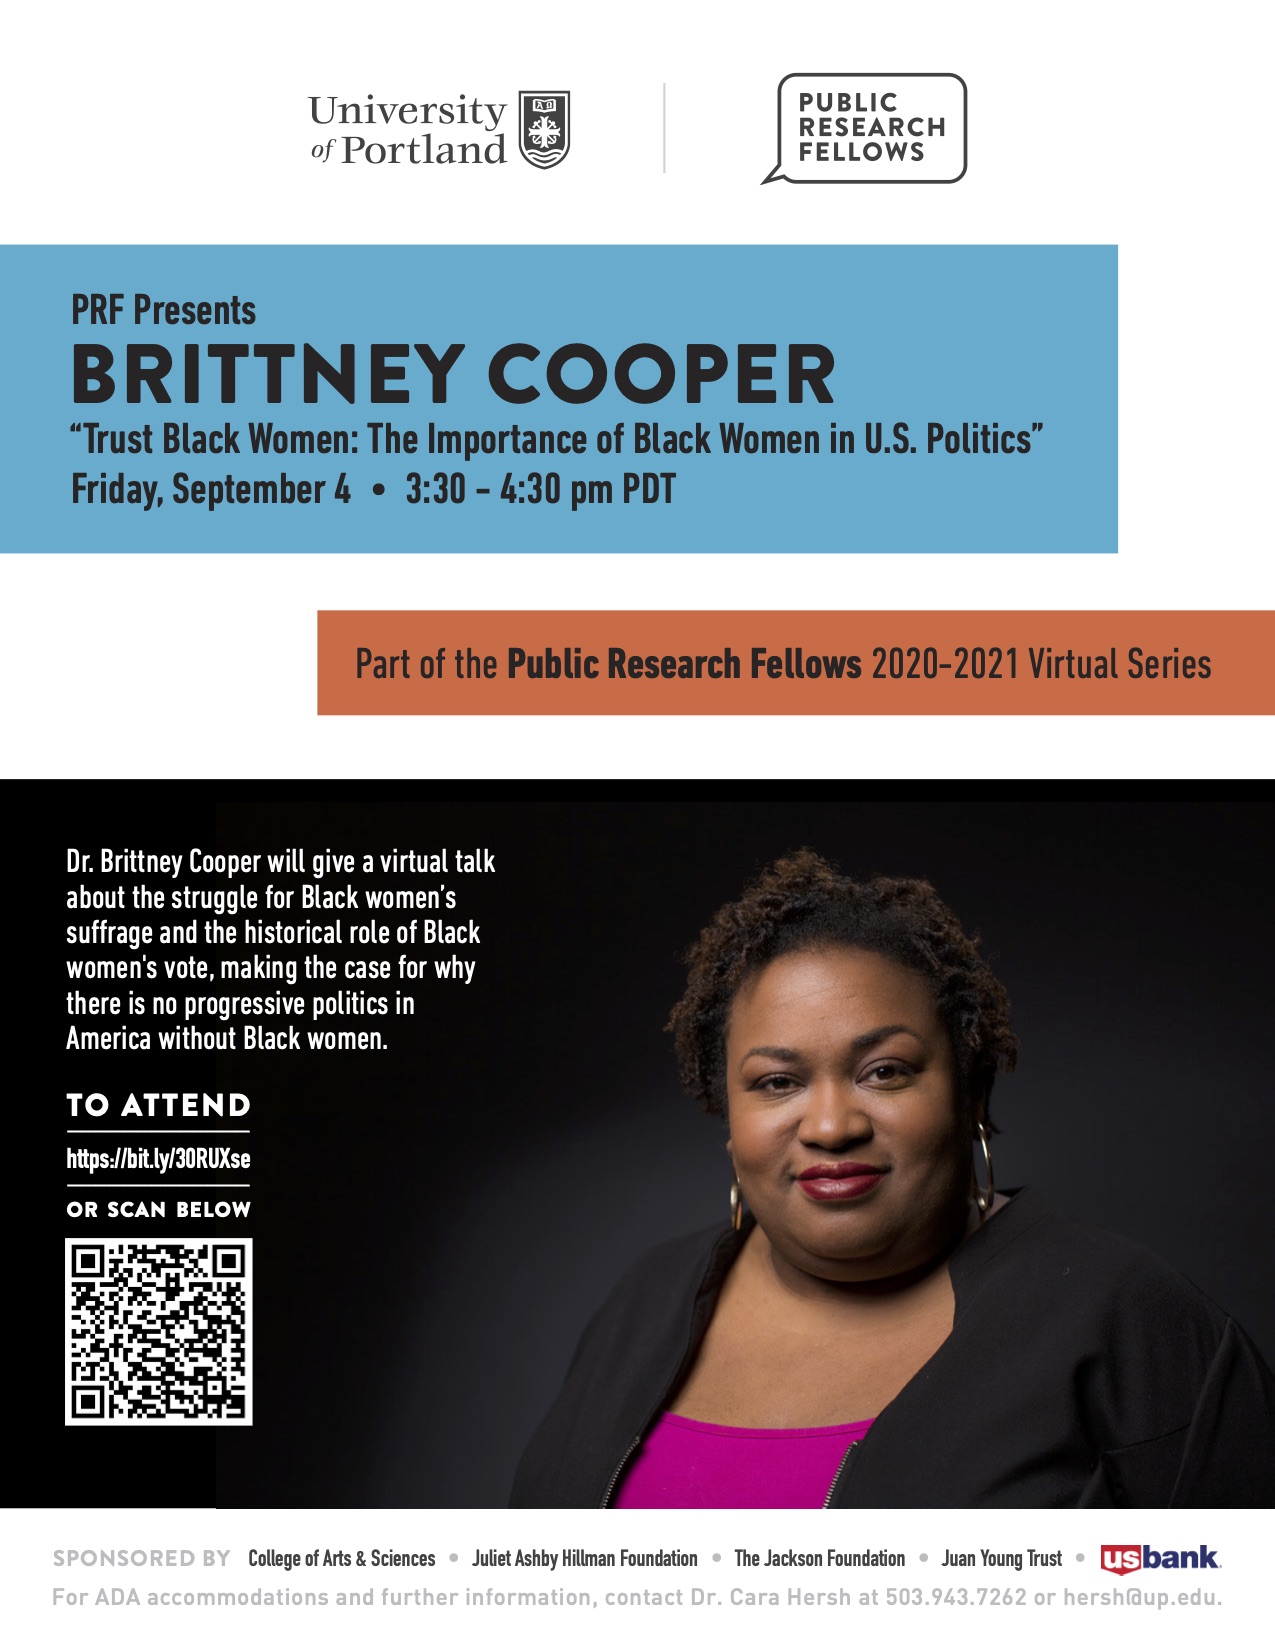 Brittney Cooper flyer.